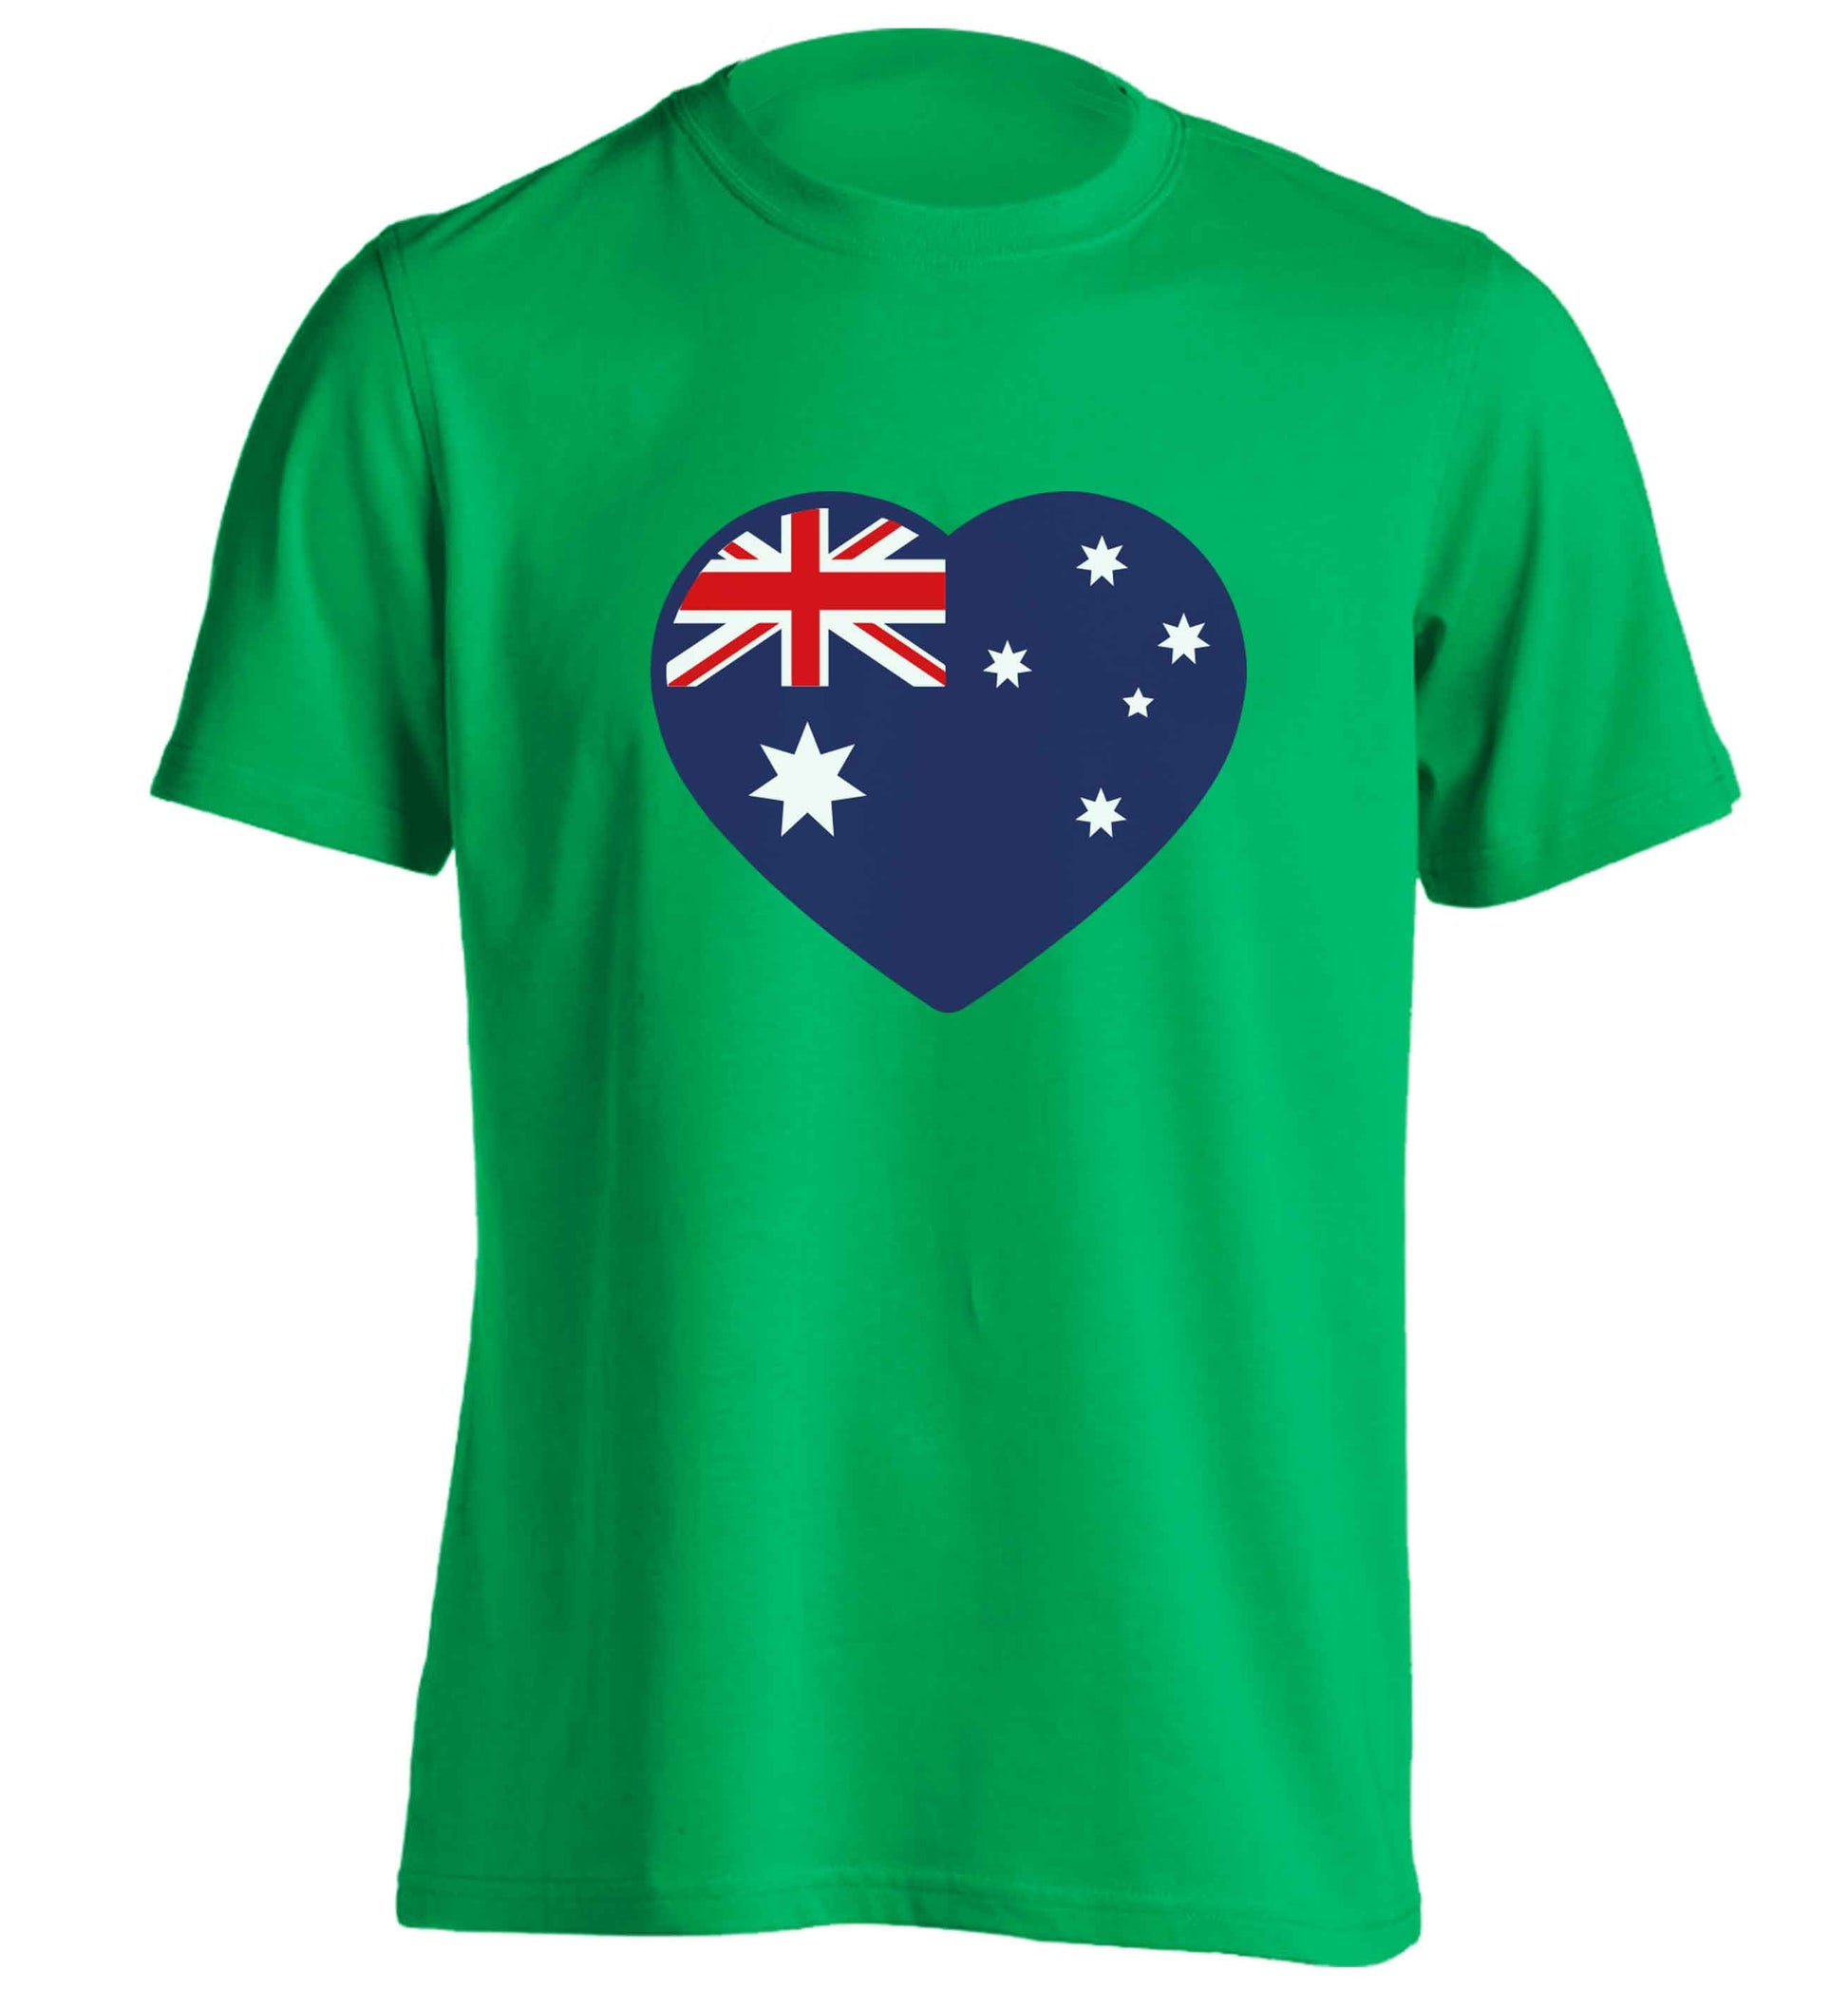 Australian Heart adults unisex green Tshirt 2XL